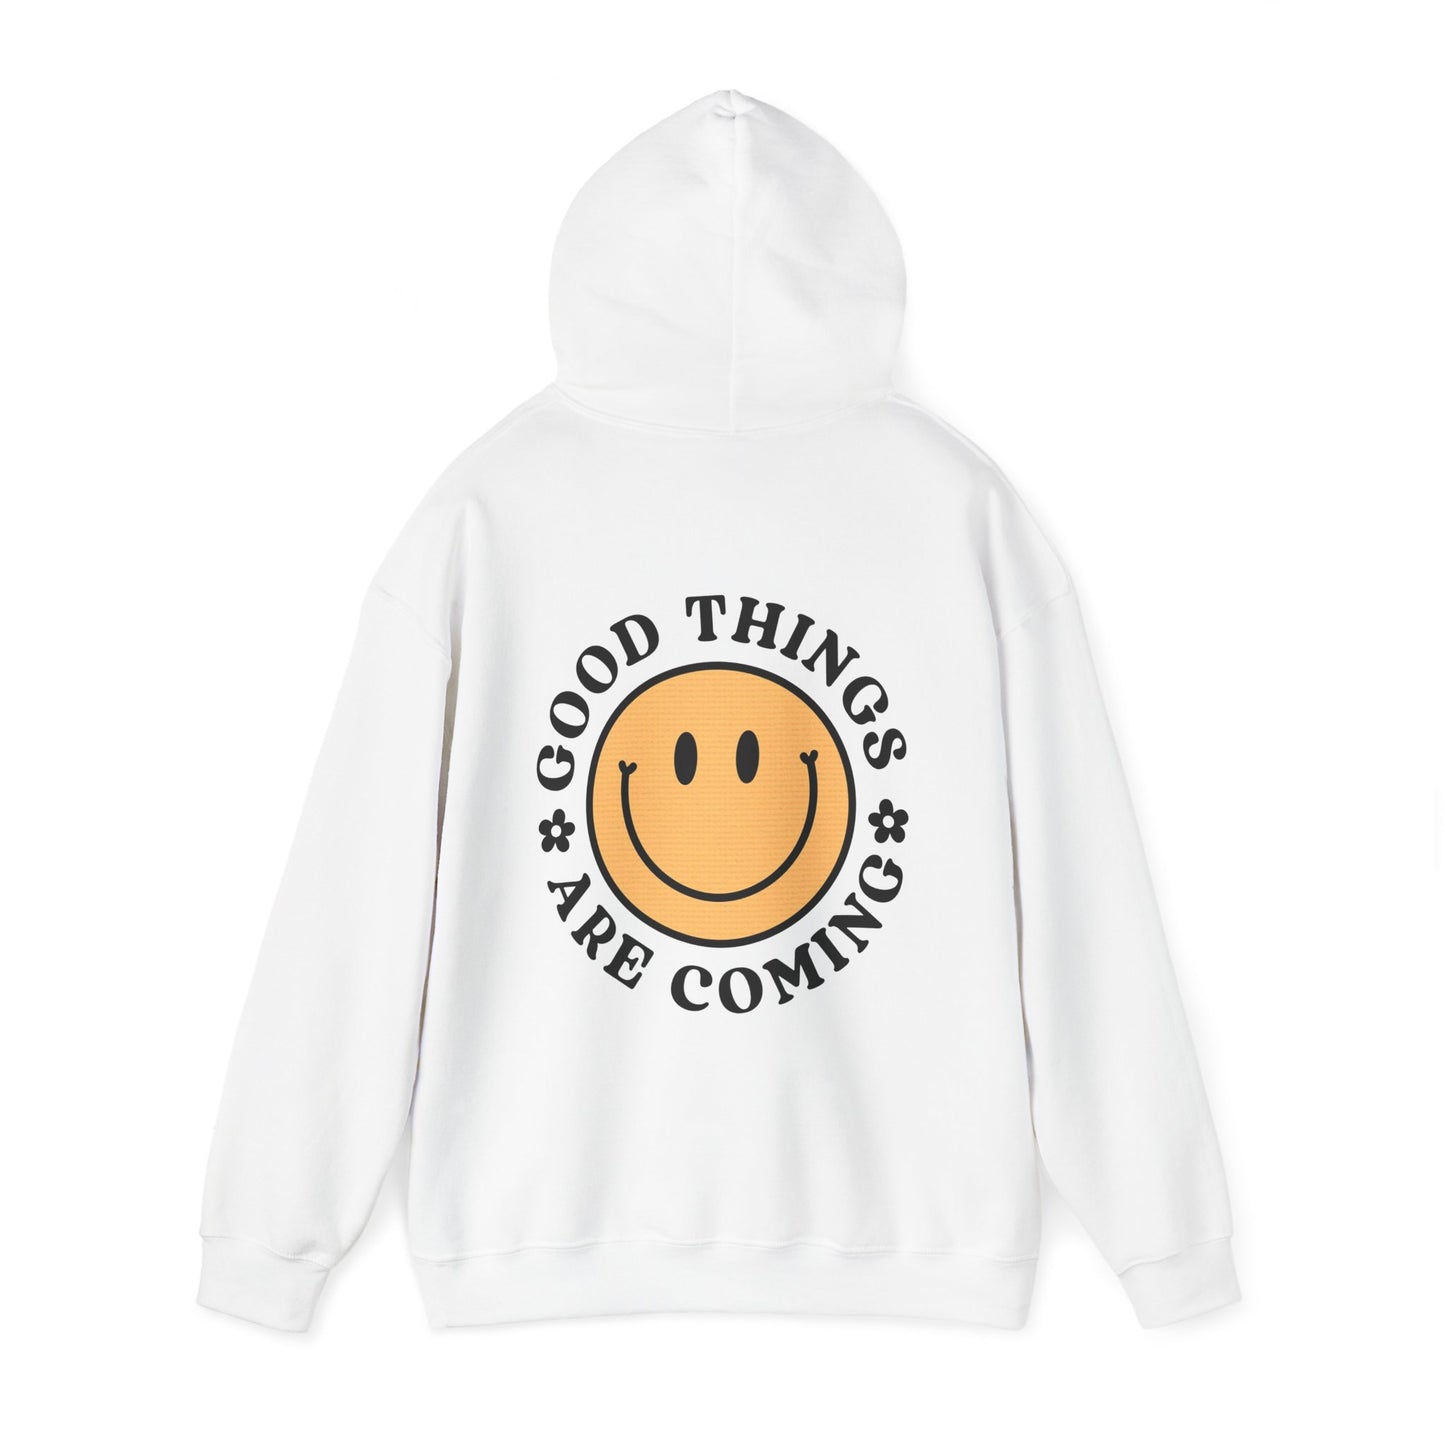 Good Things Are Coming Hooded Sweatshirt